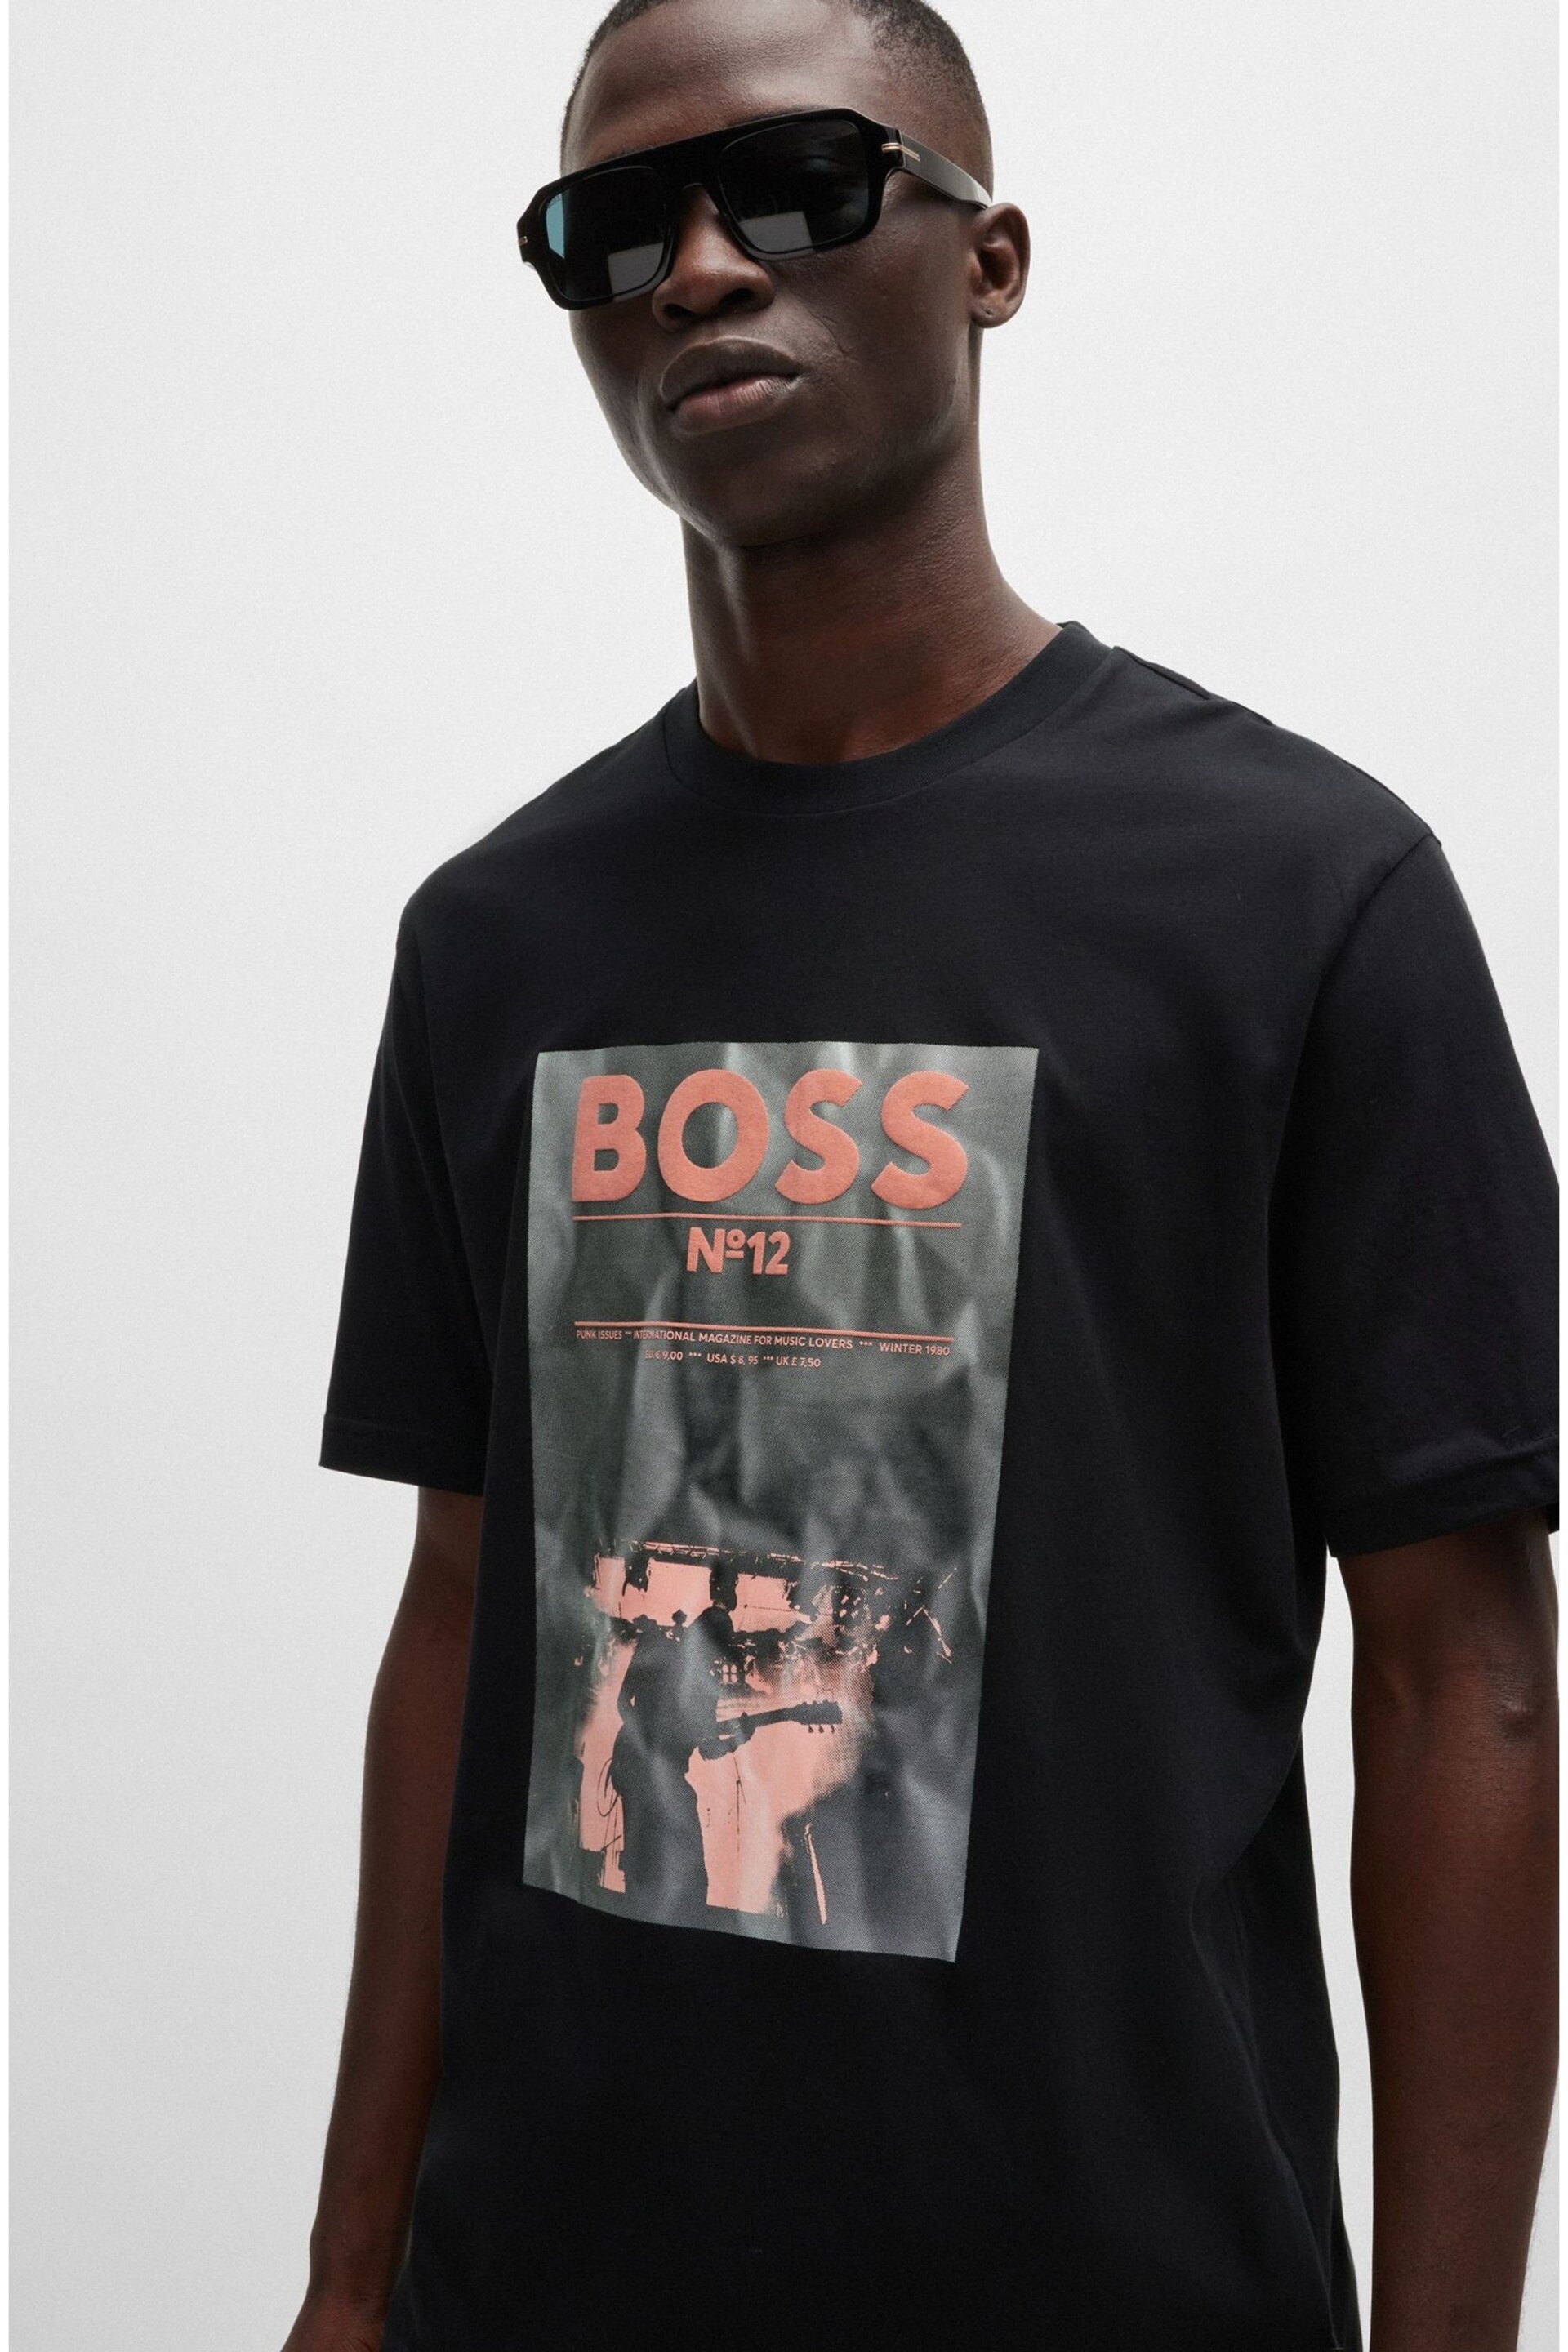 BOSS Black Music Graphic Print T-Shirt - Image 1 of 5